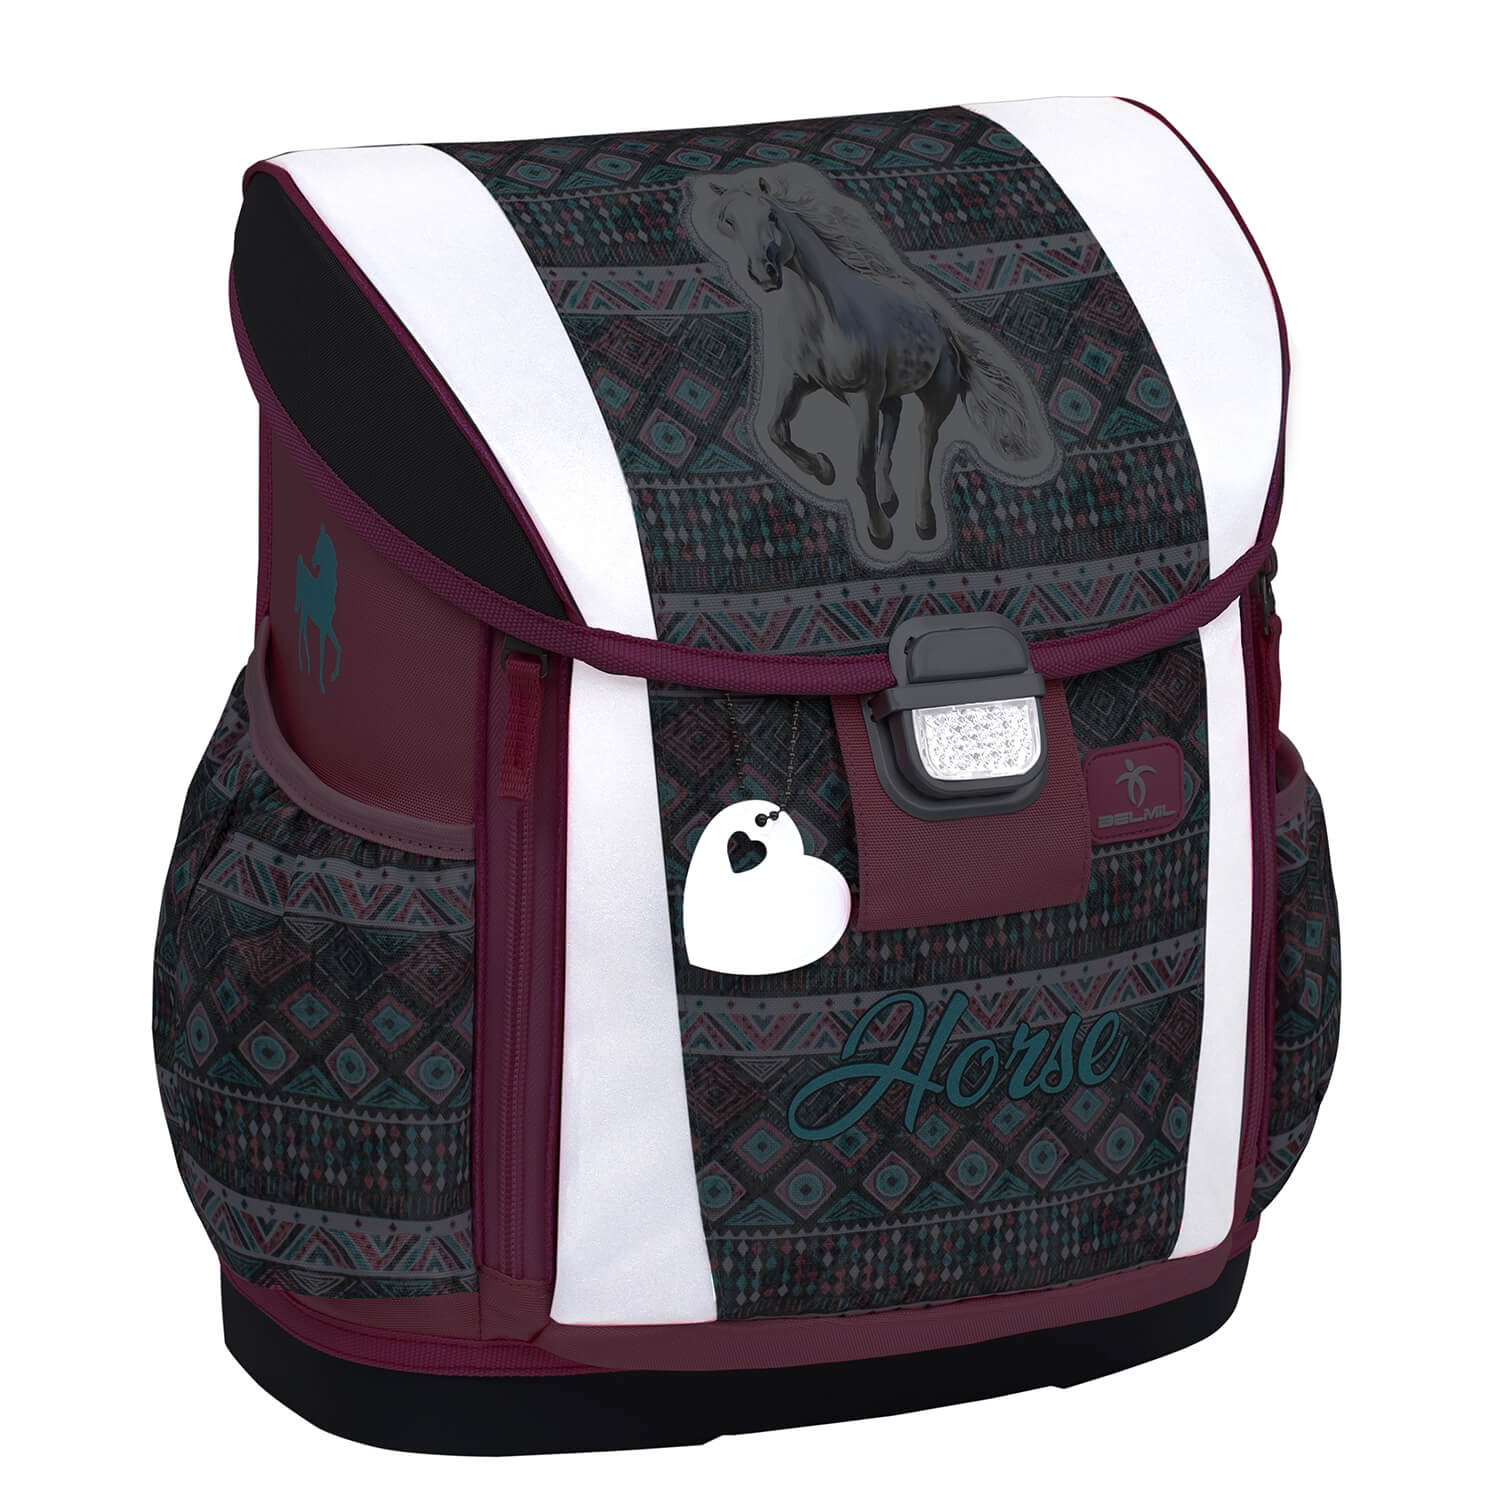 Customize Me Horse Aruba Blue schoolbag set 5 pcs with GRATIS keychain